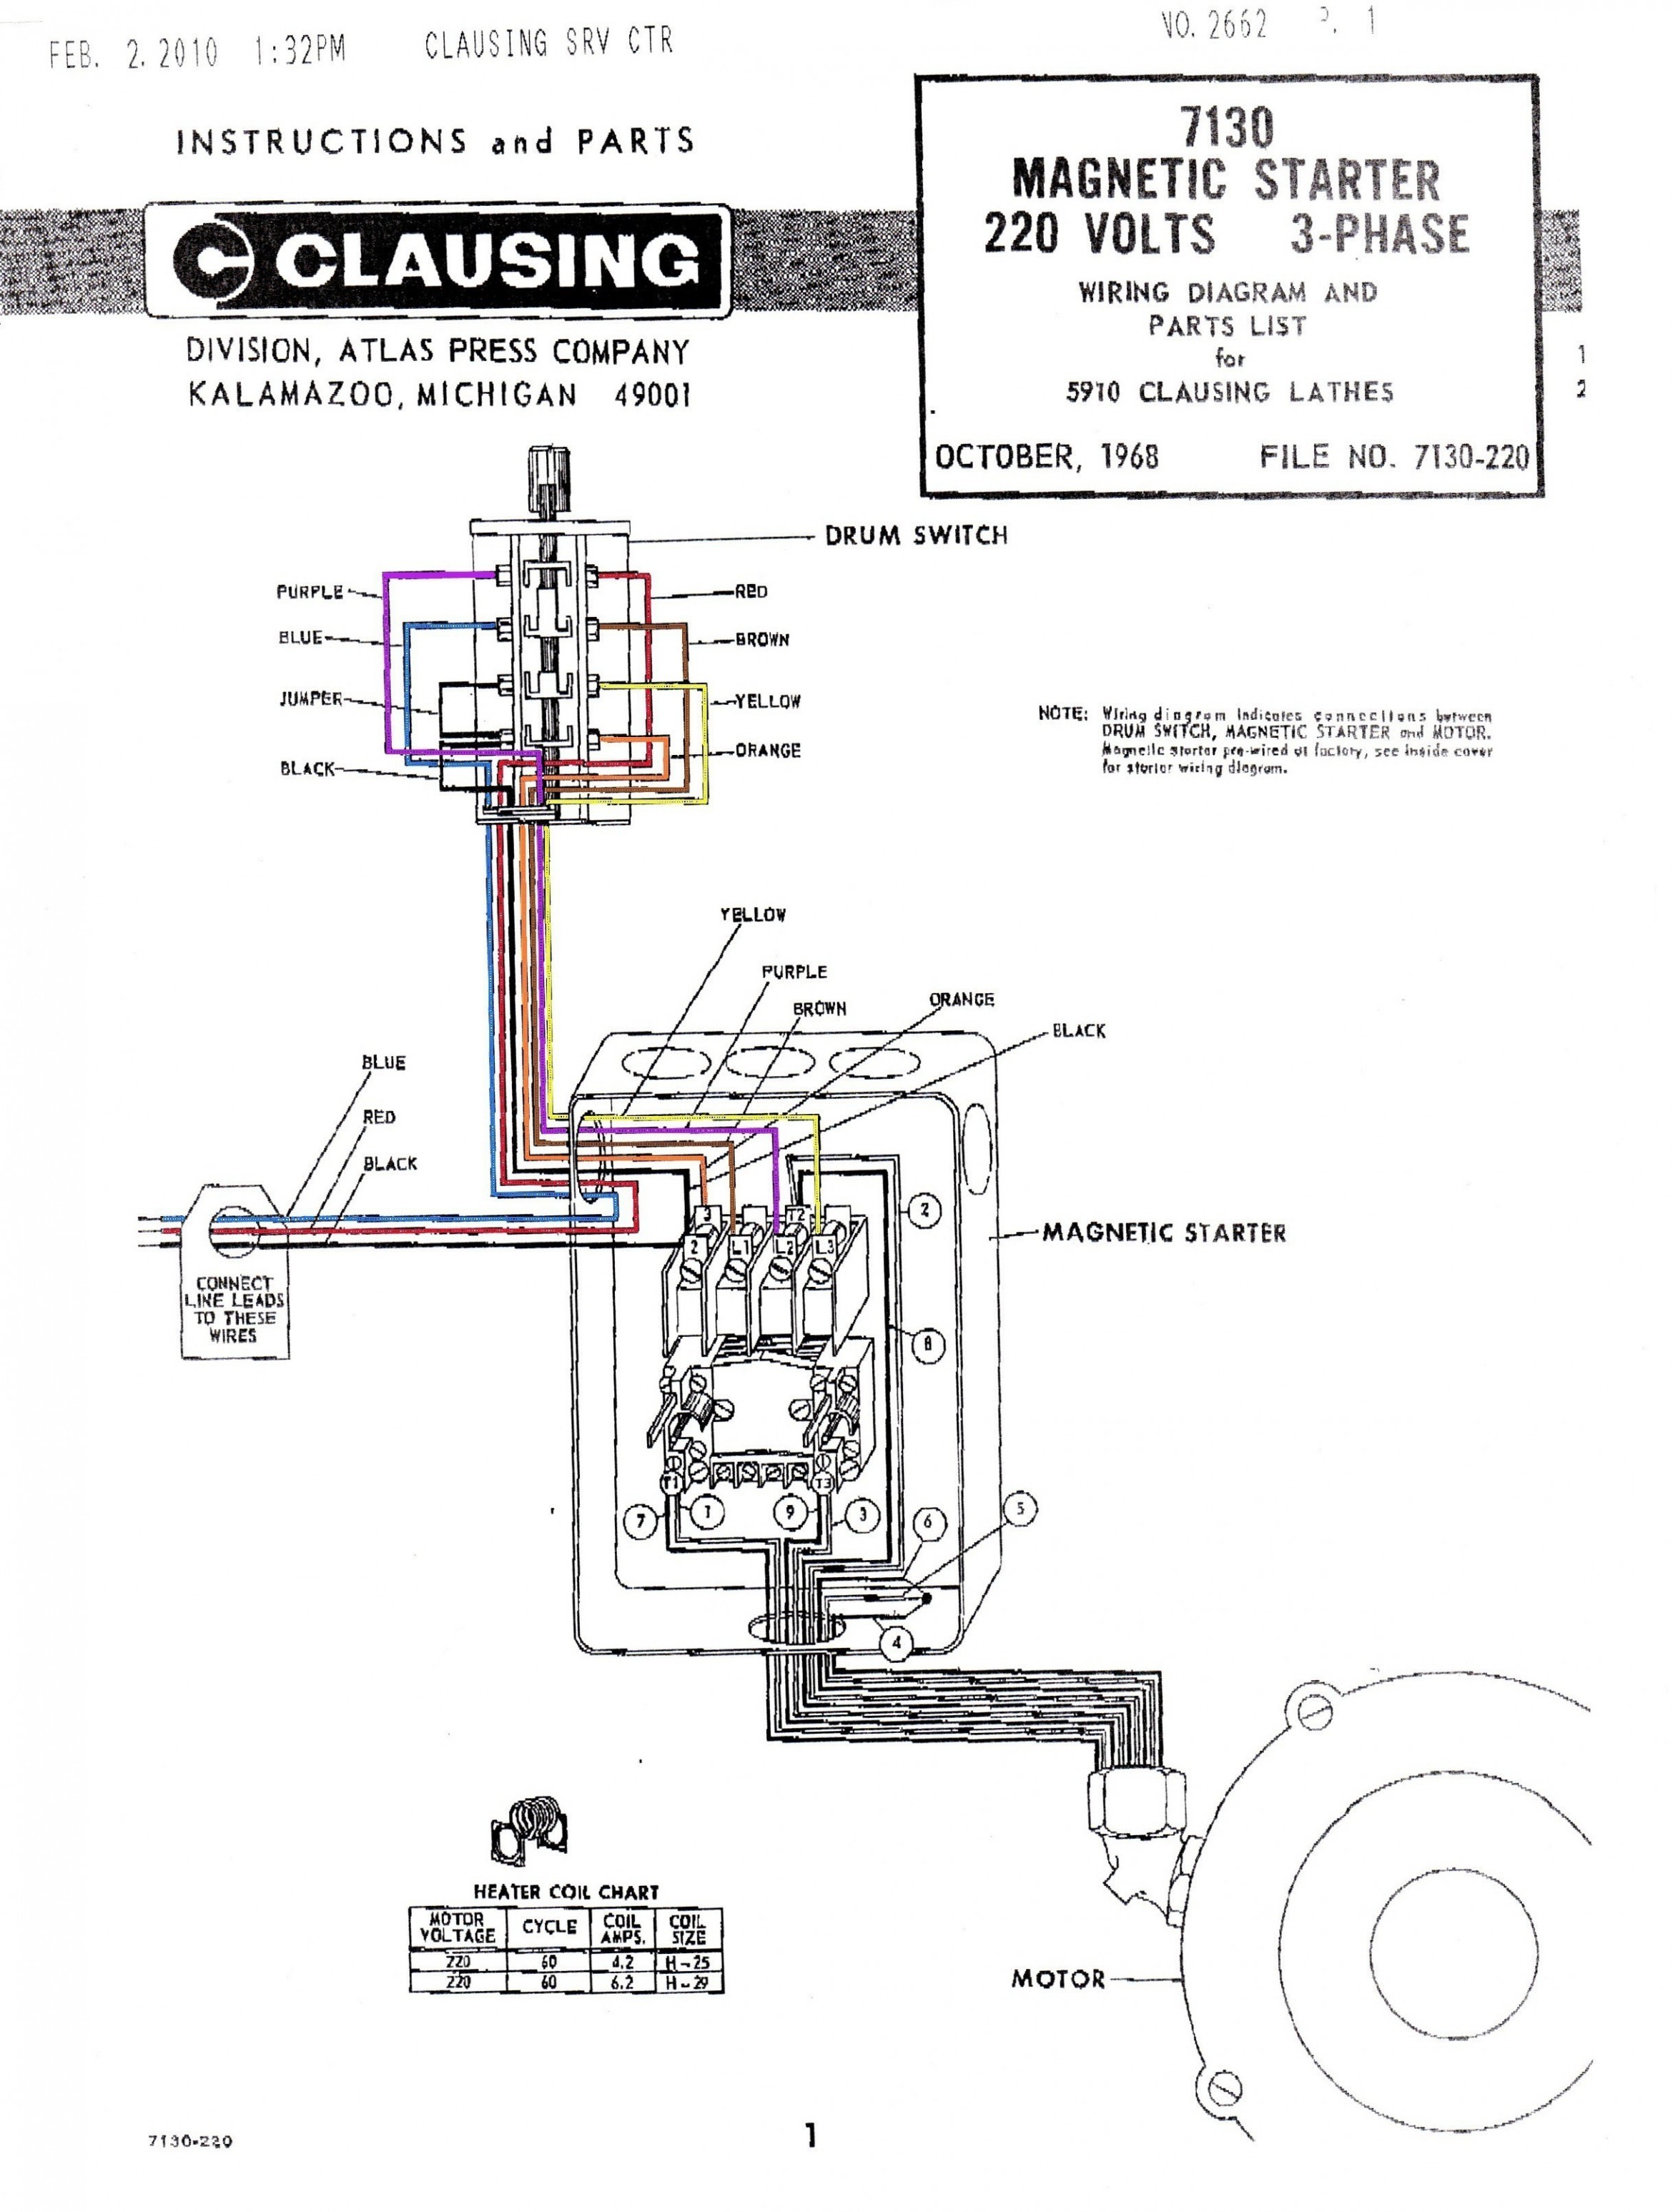 Magnetic Contactor Wiring Diagram Motor Starter Wiring Diagram Download Wiring Diagram Options Of Magnetic Contactor Wiring Diagram